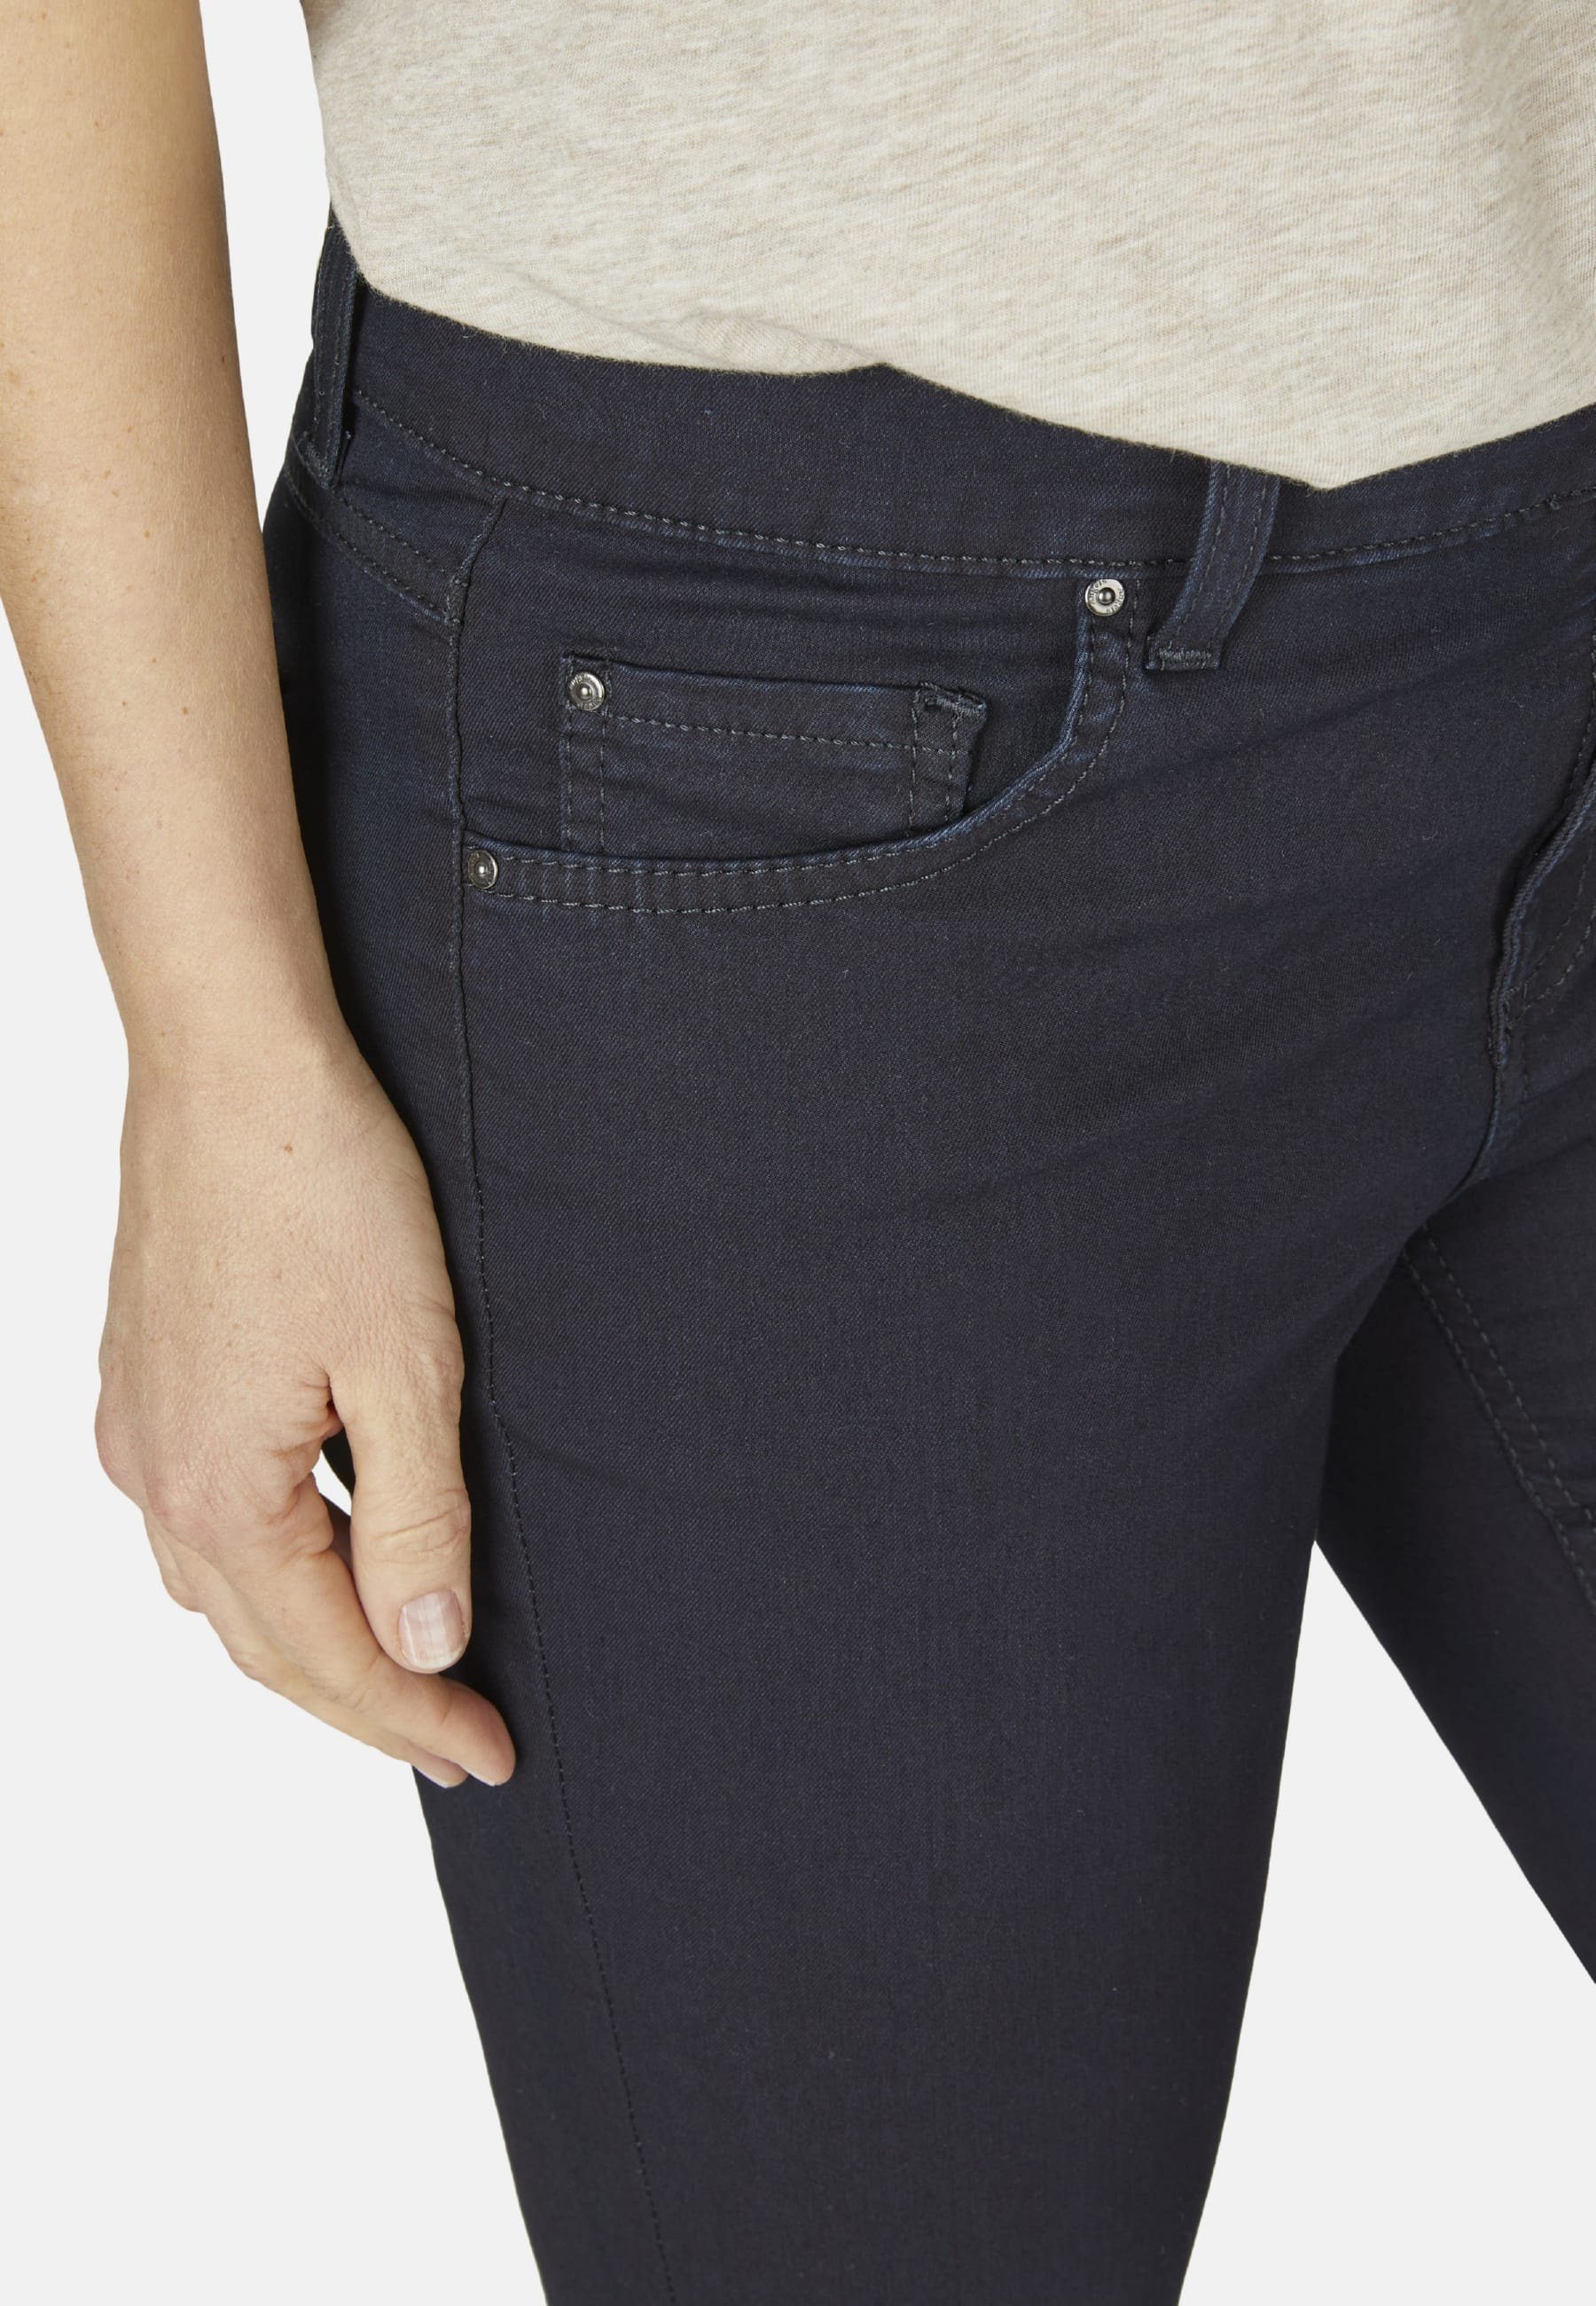 Label-Applikationen Stretch mit cleanem Slim-fit-Jeans ANGELS Super Jeans dunkelblau mit Denim Skinny